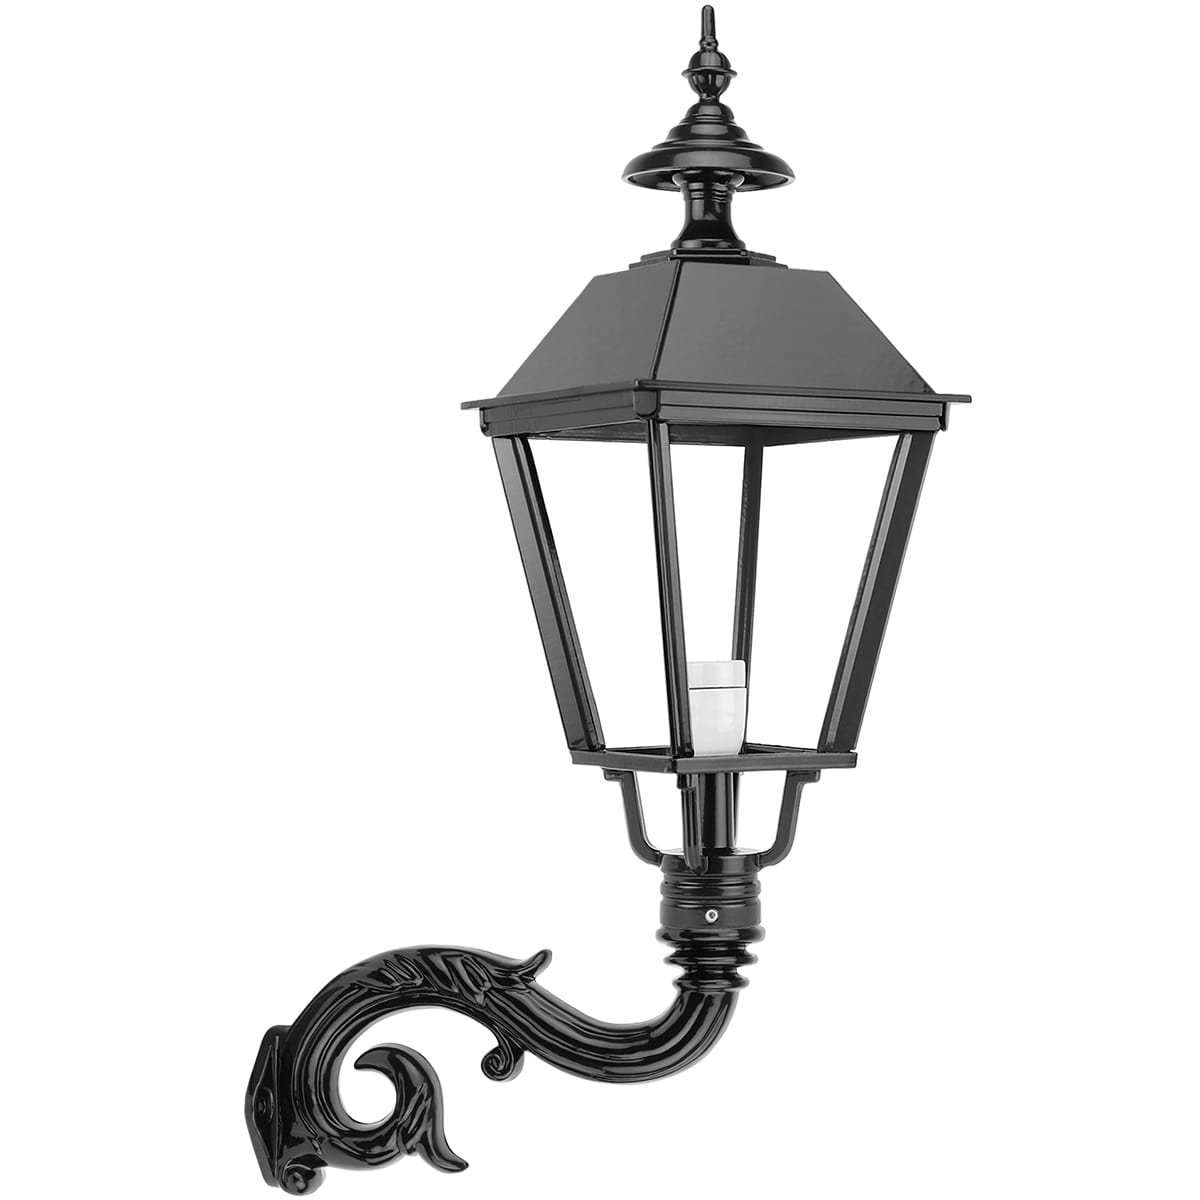 Barn lamp square Beverwijk - 77 cm